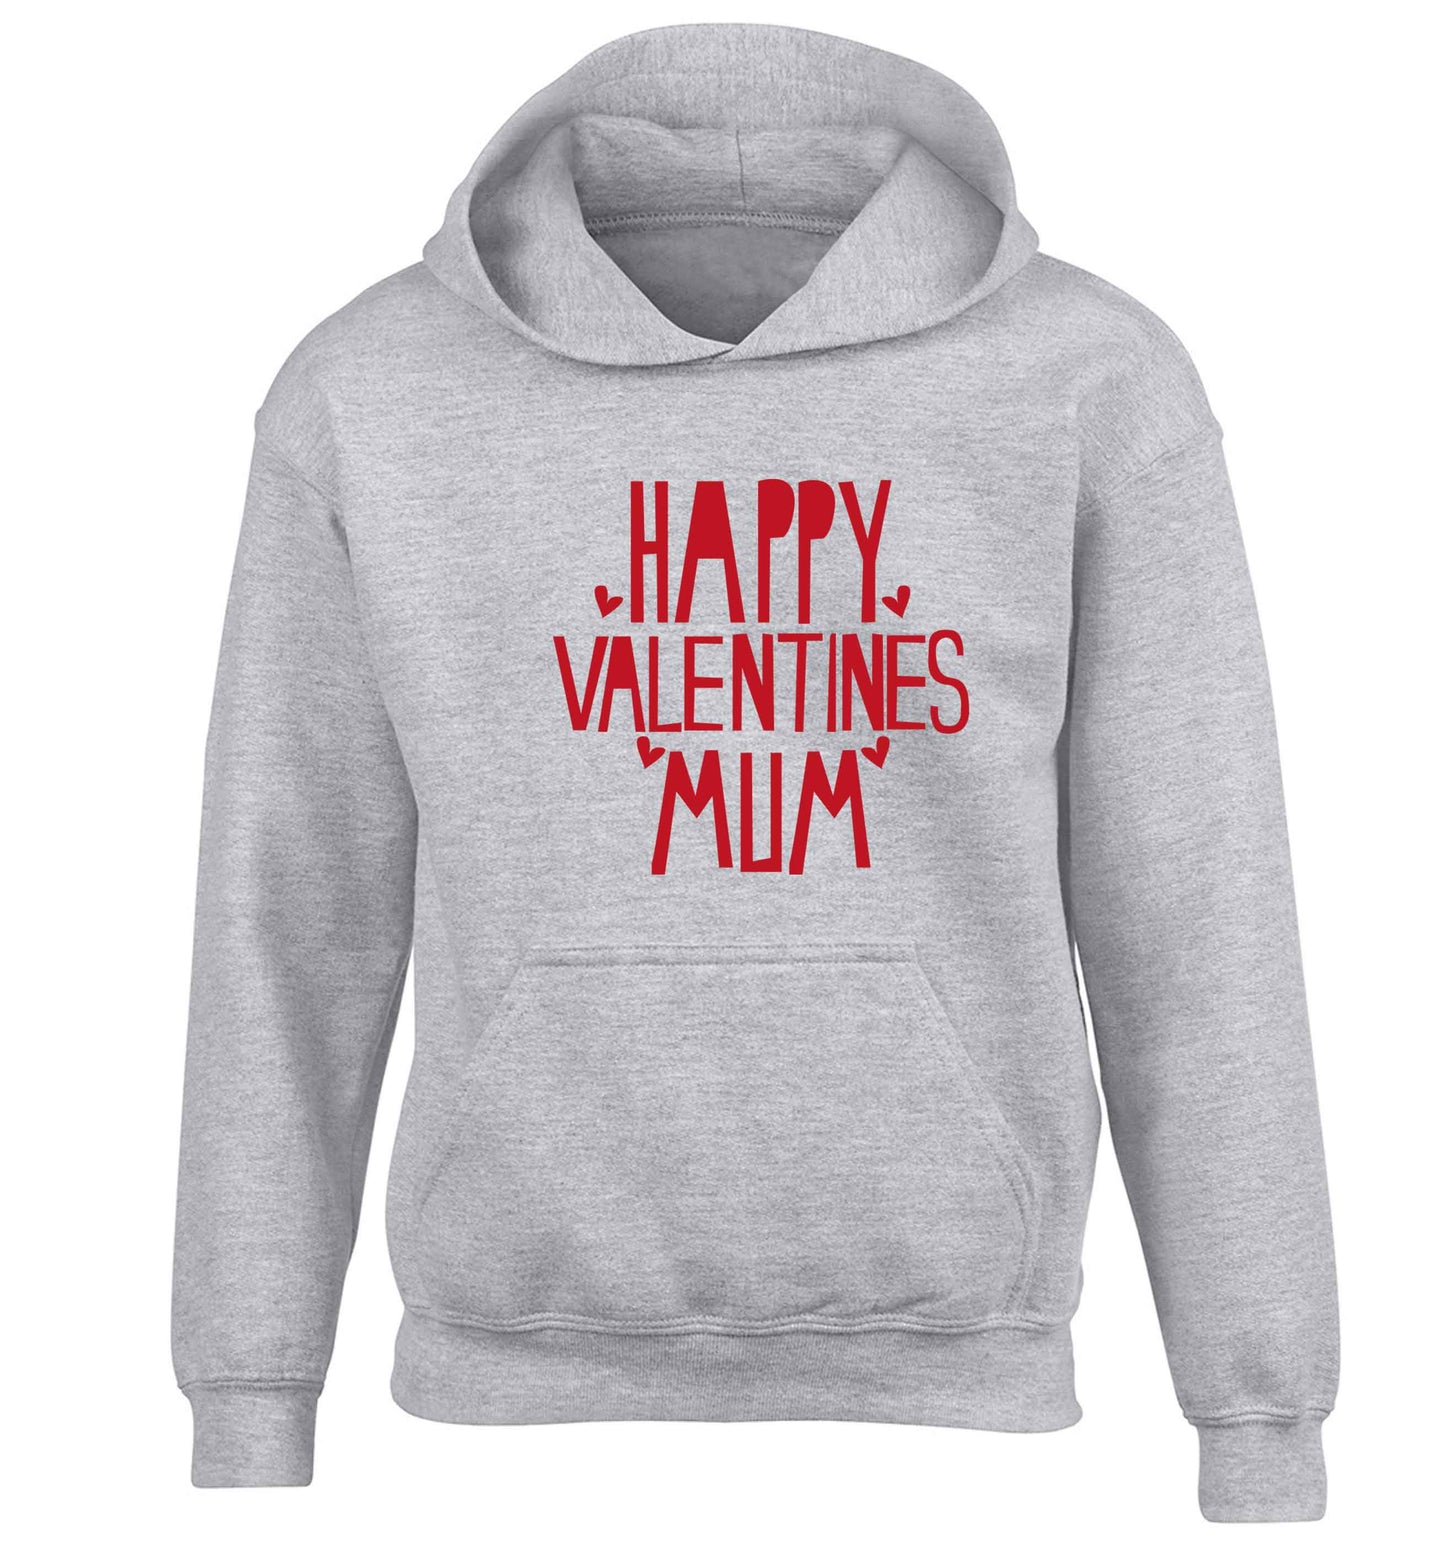 Happy valentines mum children's grey hoodie 12-13 Years